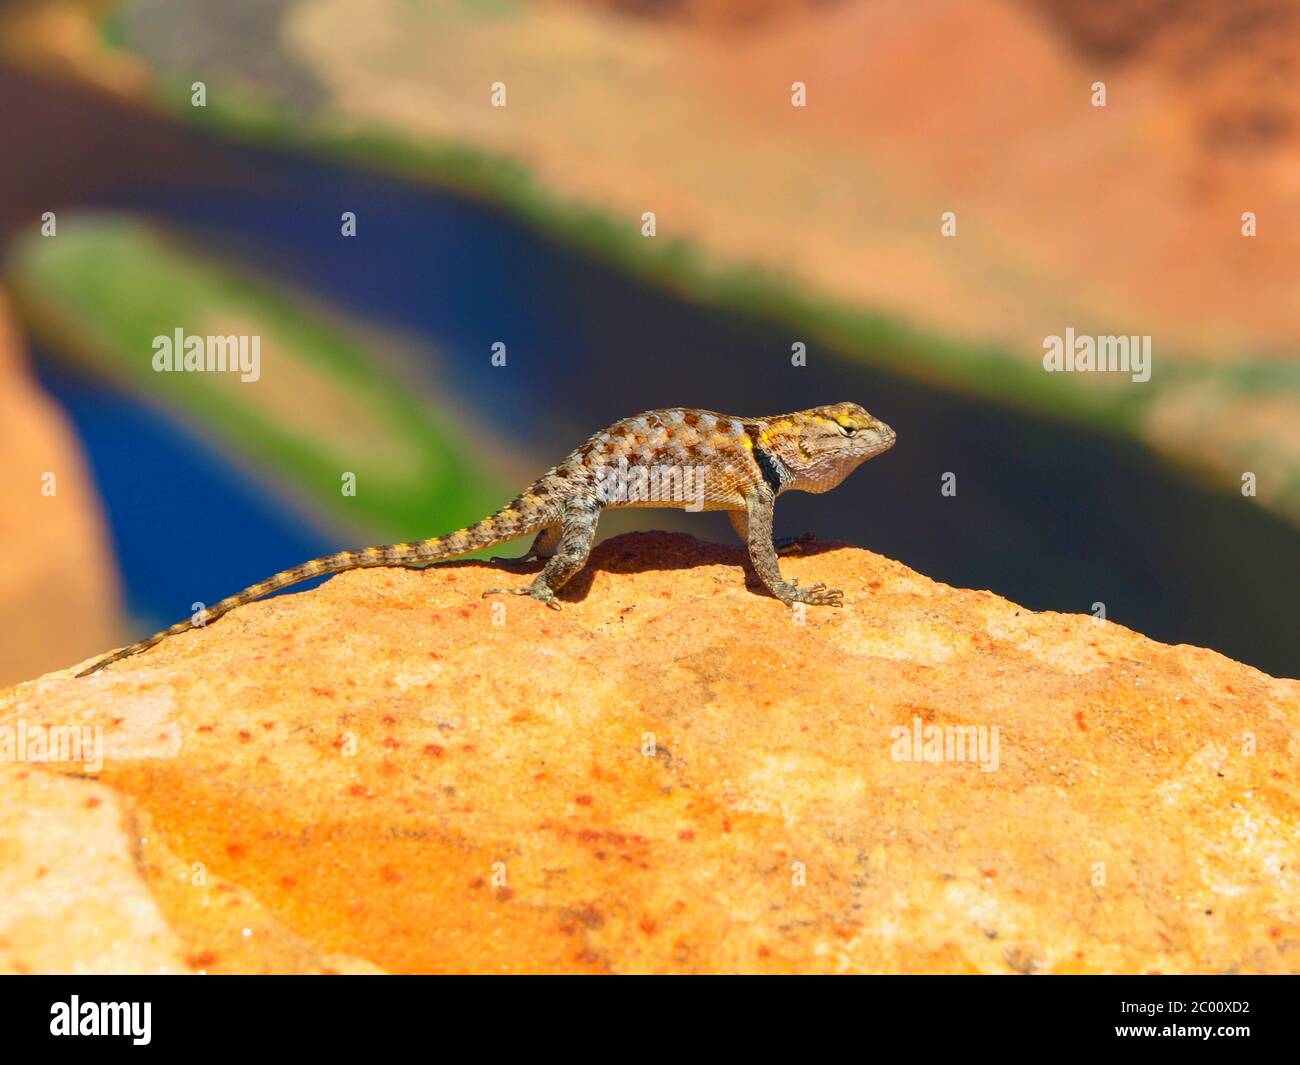 Colorful sagebrush lizard on the rock at Colorado Horshoe Bend, Arizona, USA Stock Photo